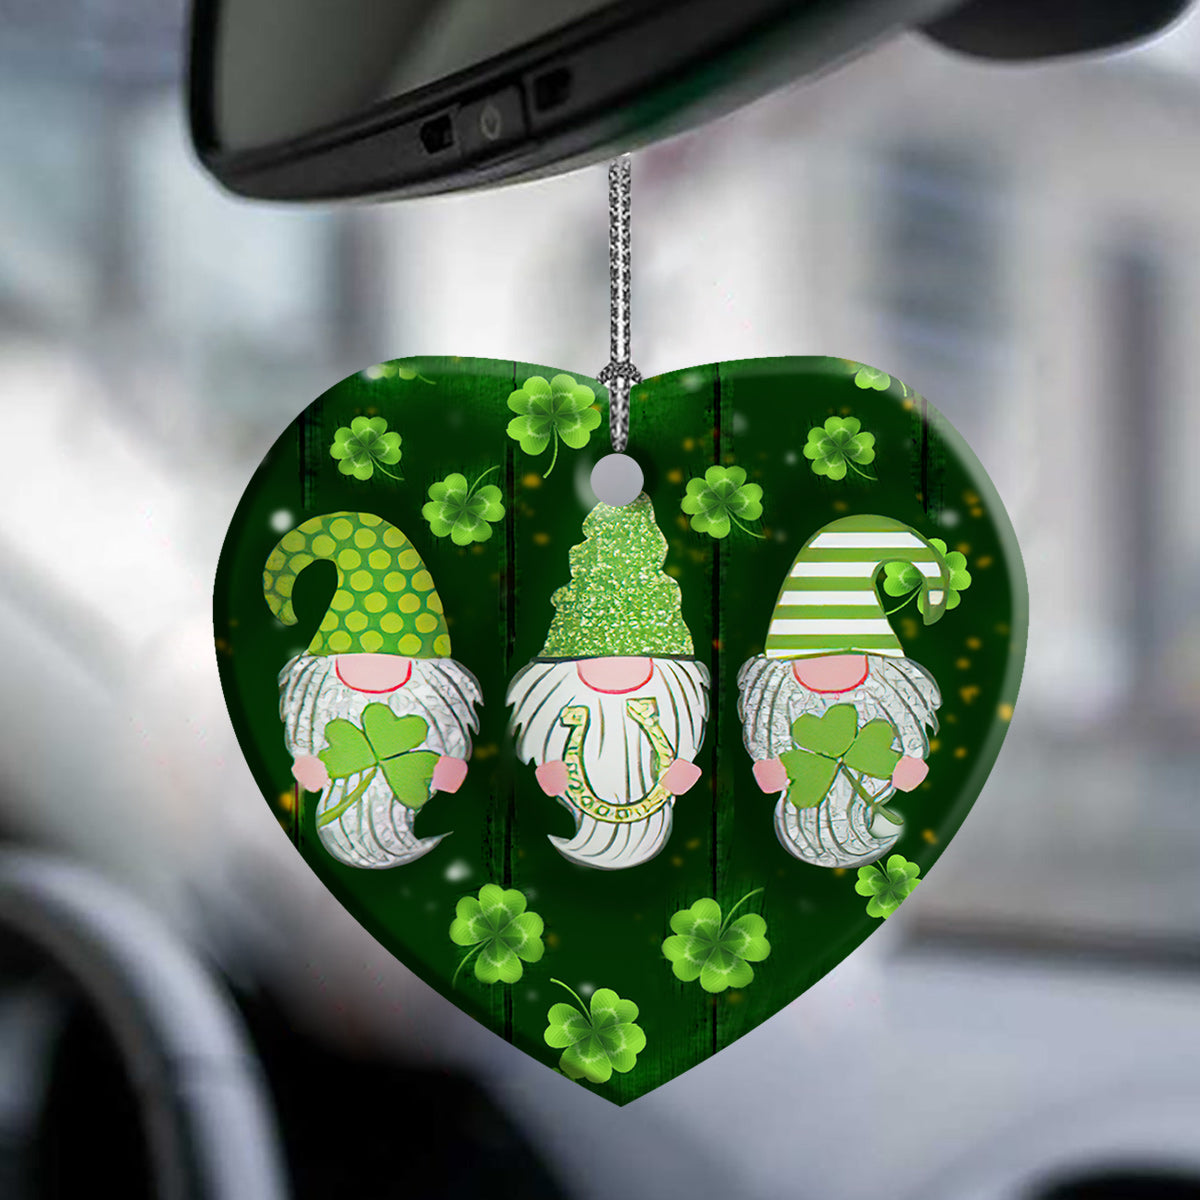 St Patricks Day Gnome Irish Kisses And Shamrock Wishes Heart Ceramic Ornament - Christmas Ornament - Christmas Gift